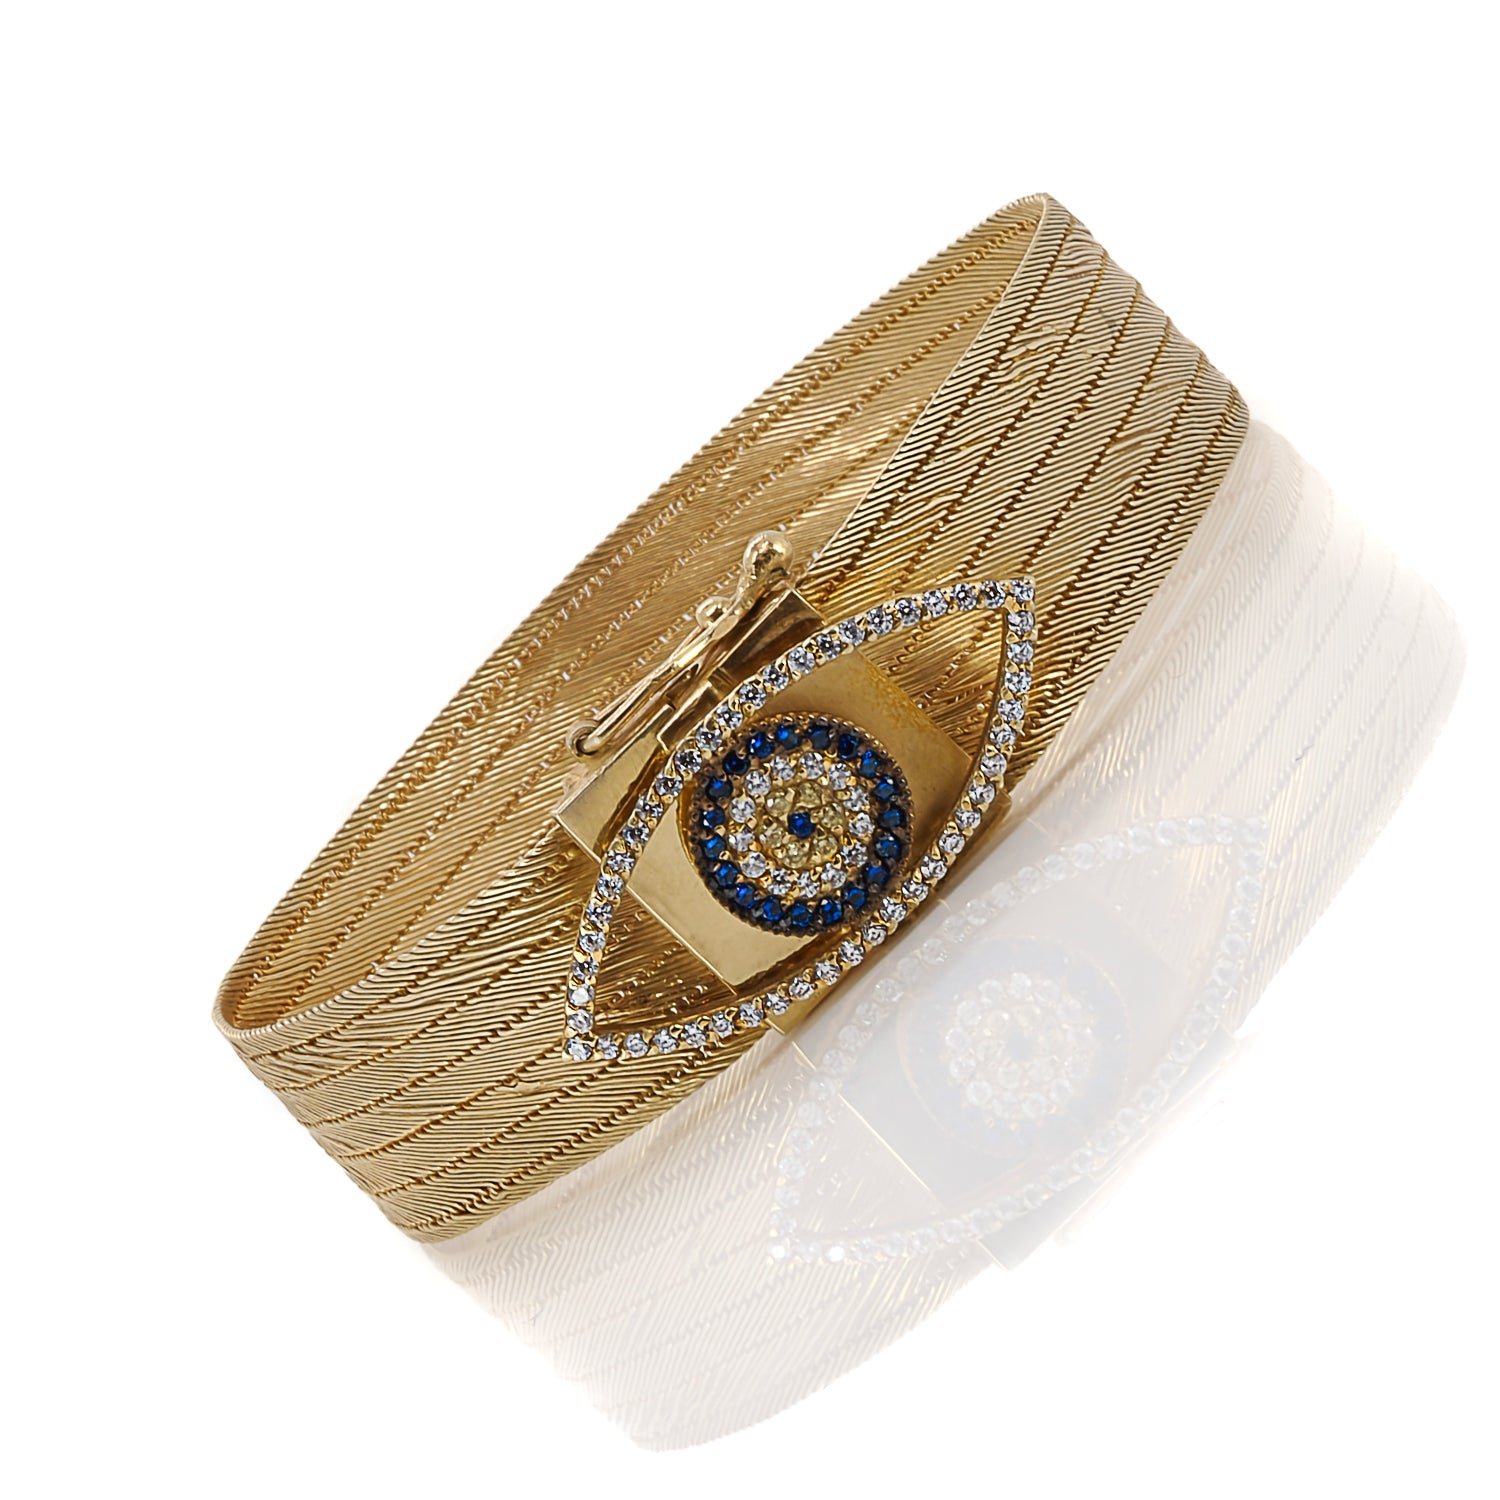 Express Your Individuality with the Filigree Diamond Evil Eye Bracelet.